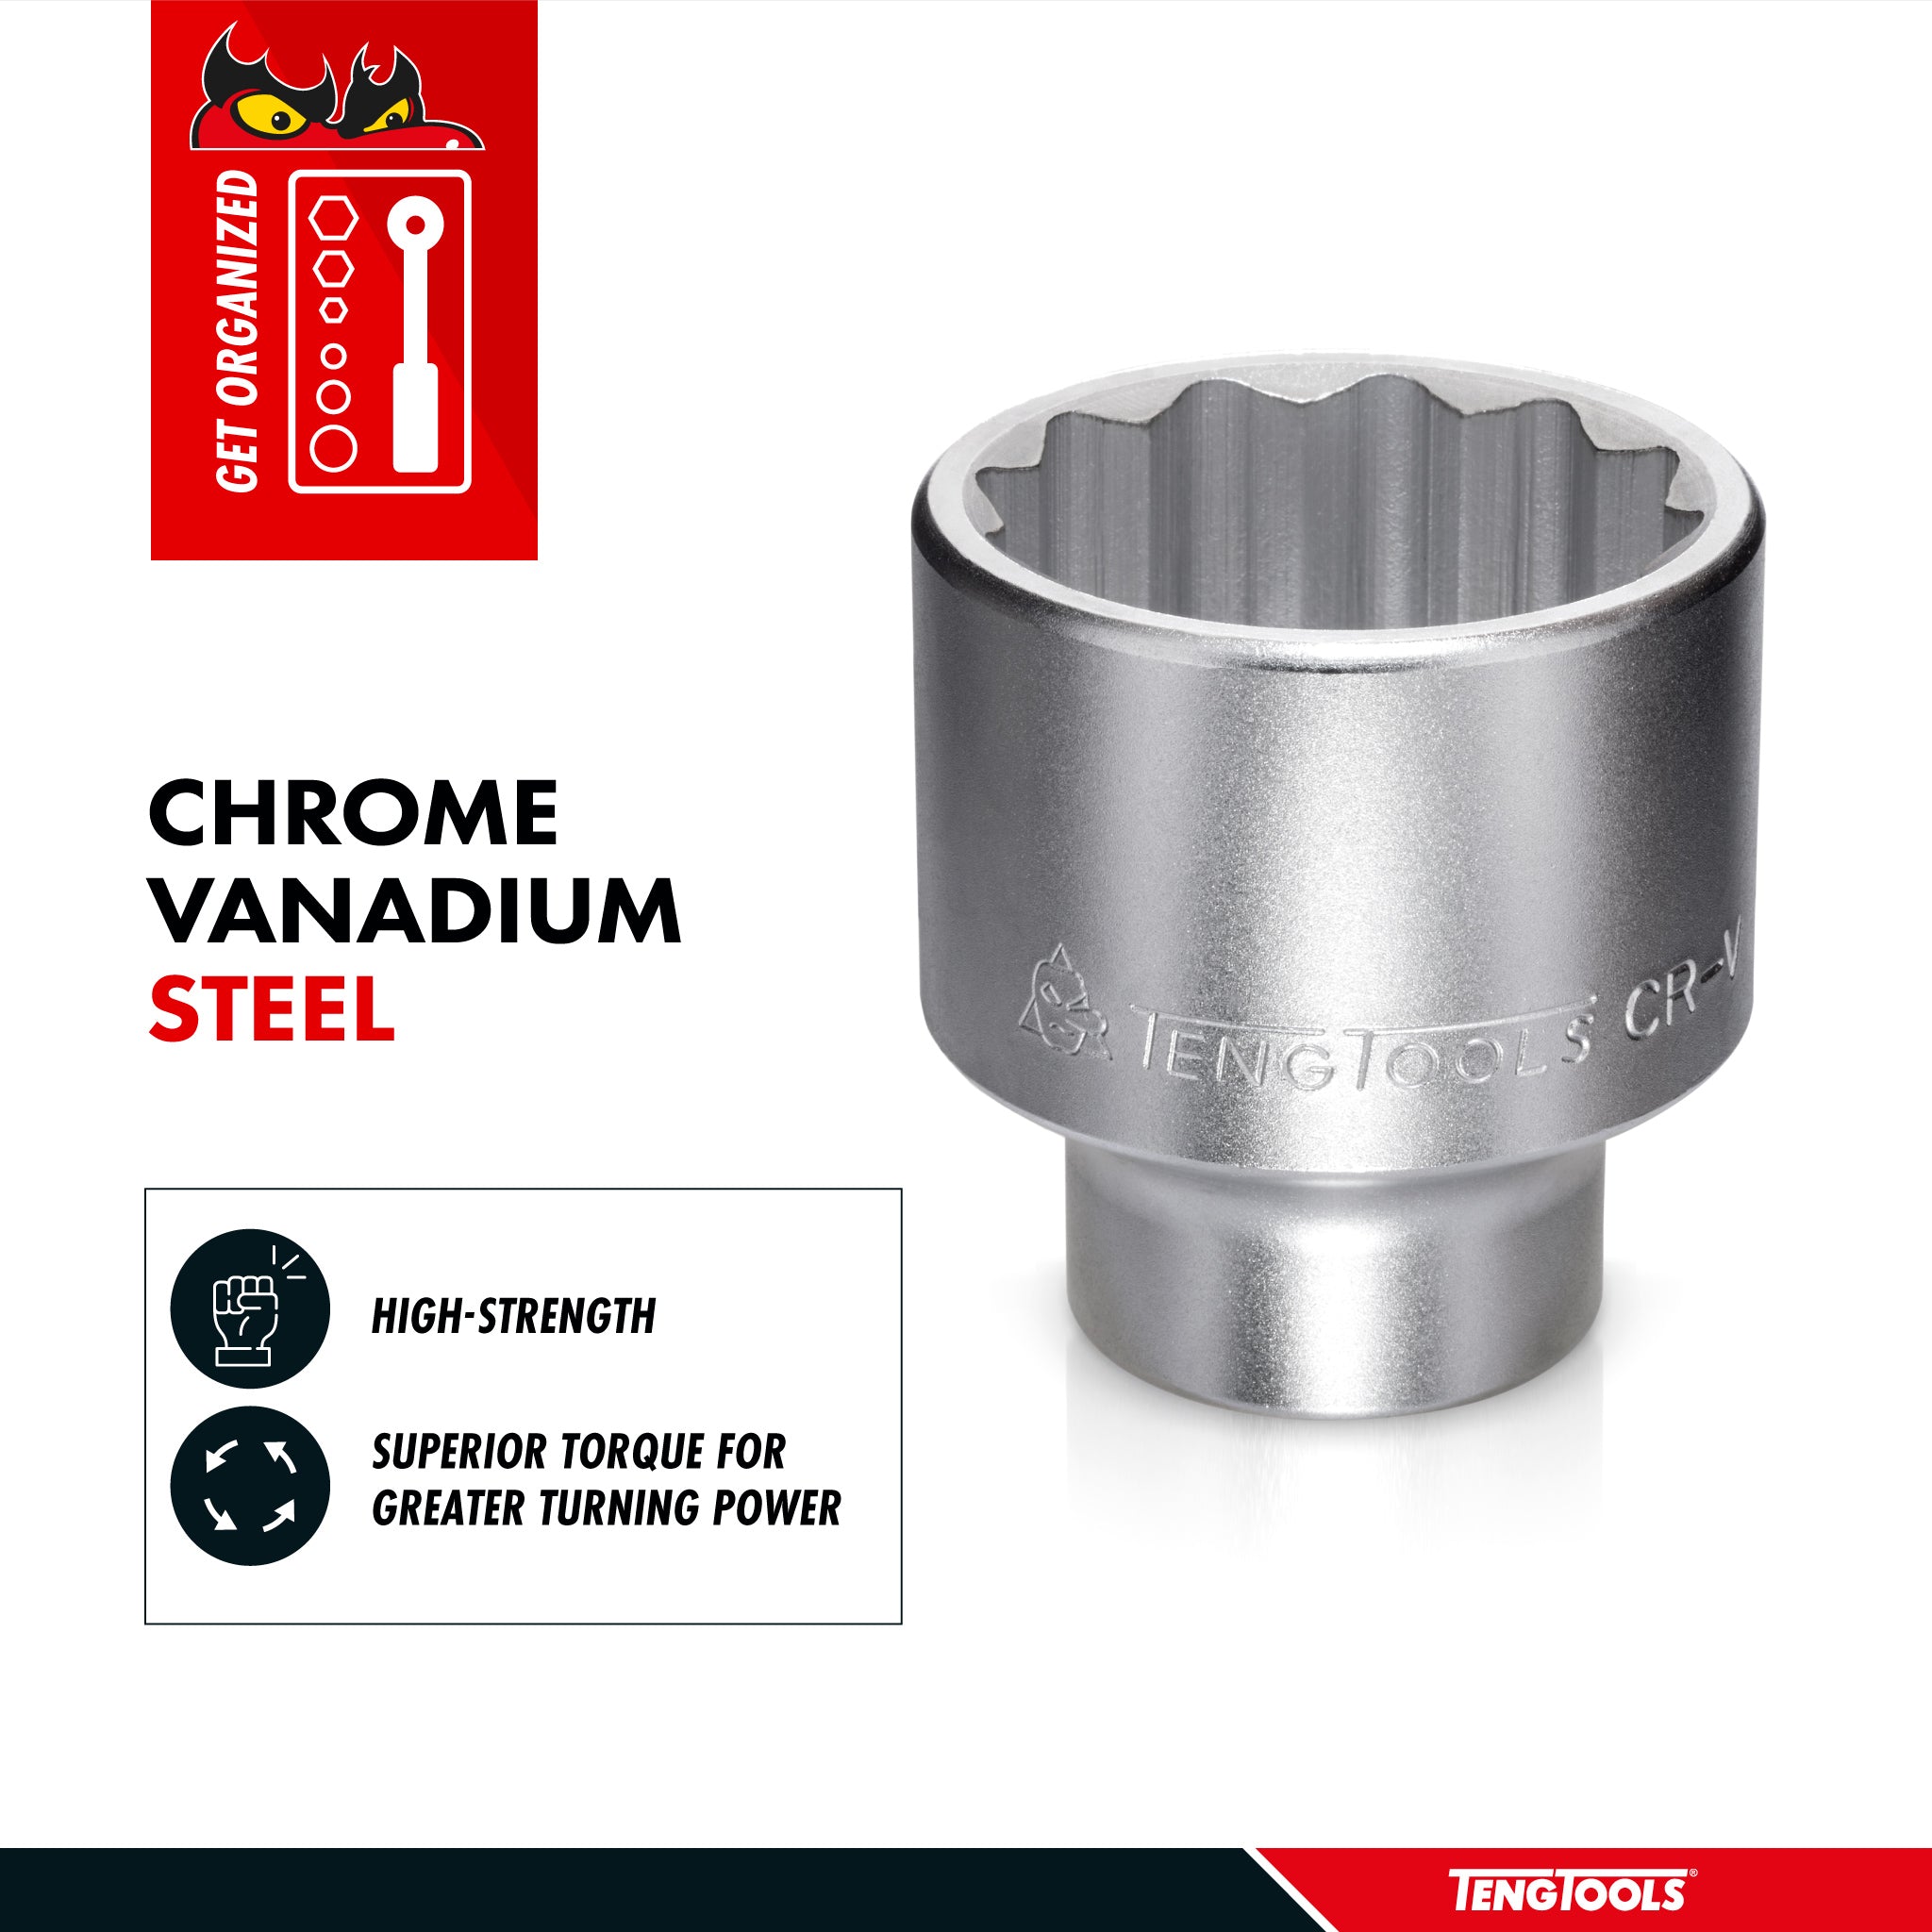 Teng Tools 1 Inch Drive 12 Point Metric Shallow Chrome Vanadium Sockets - 60mm